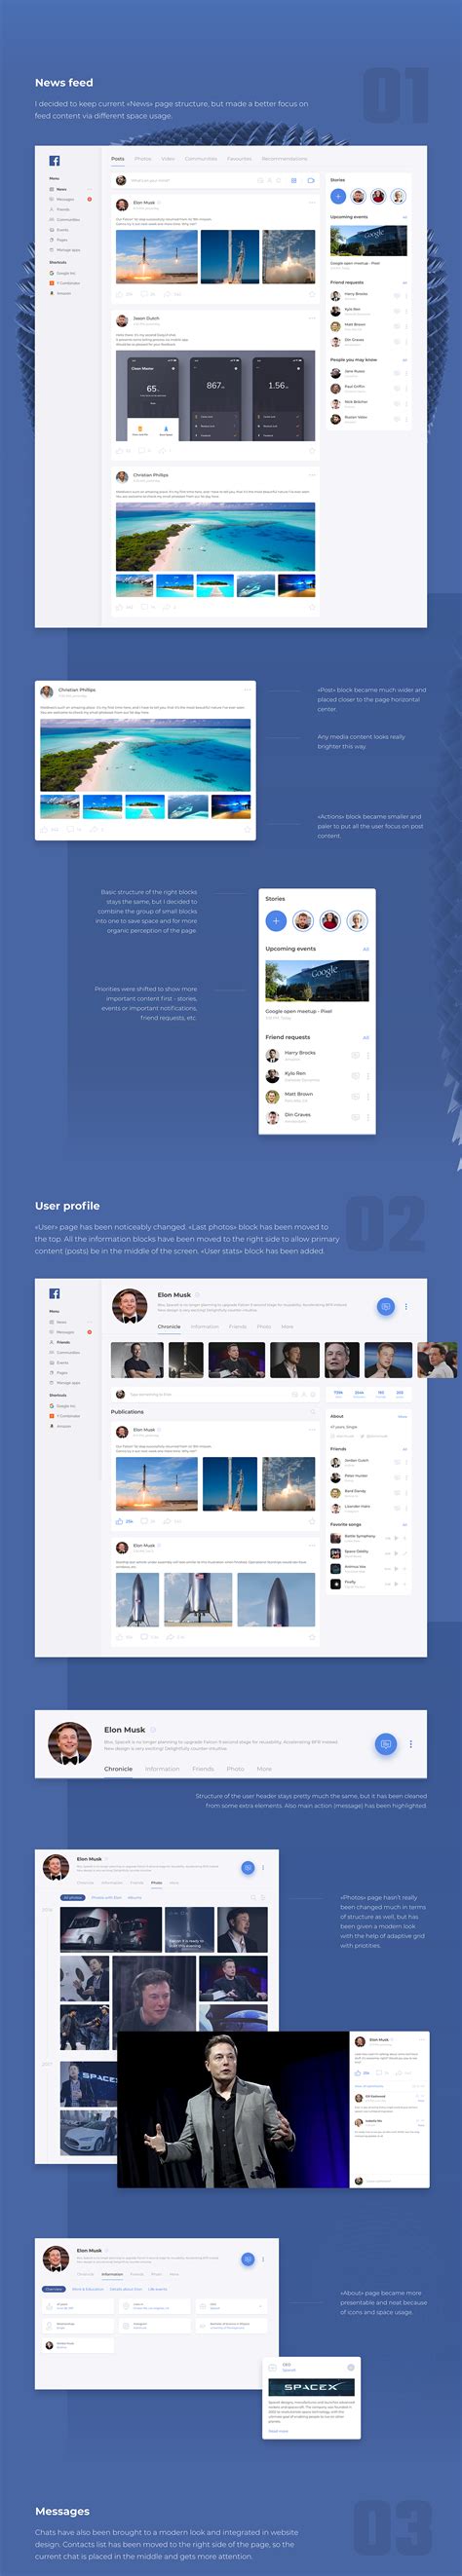 Facebook redesign concept on Behance